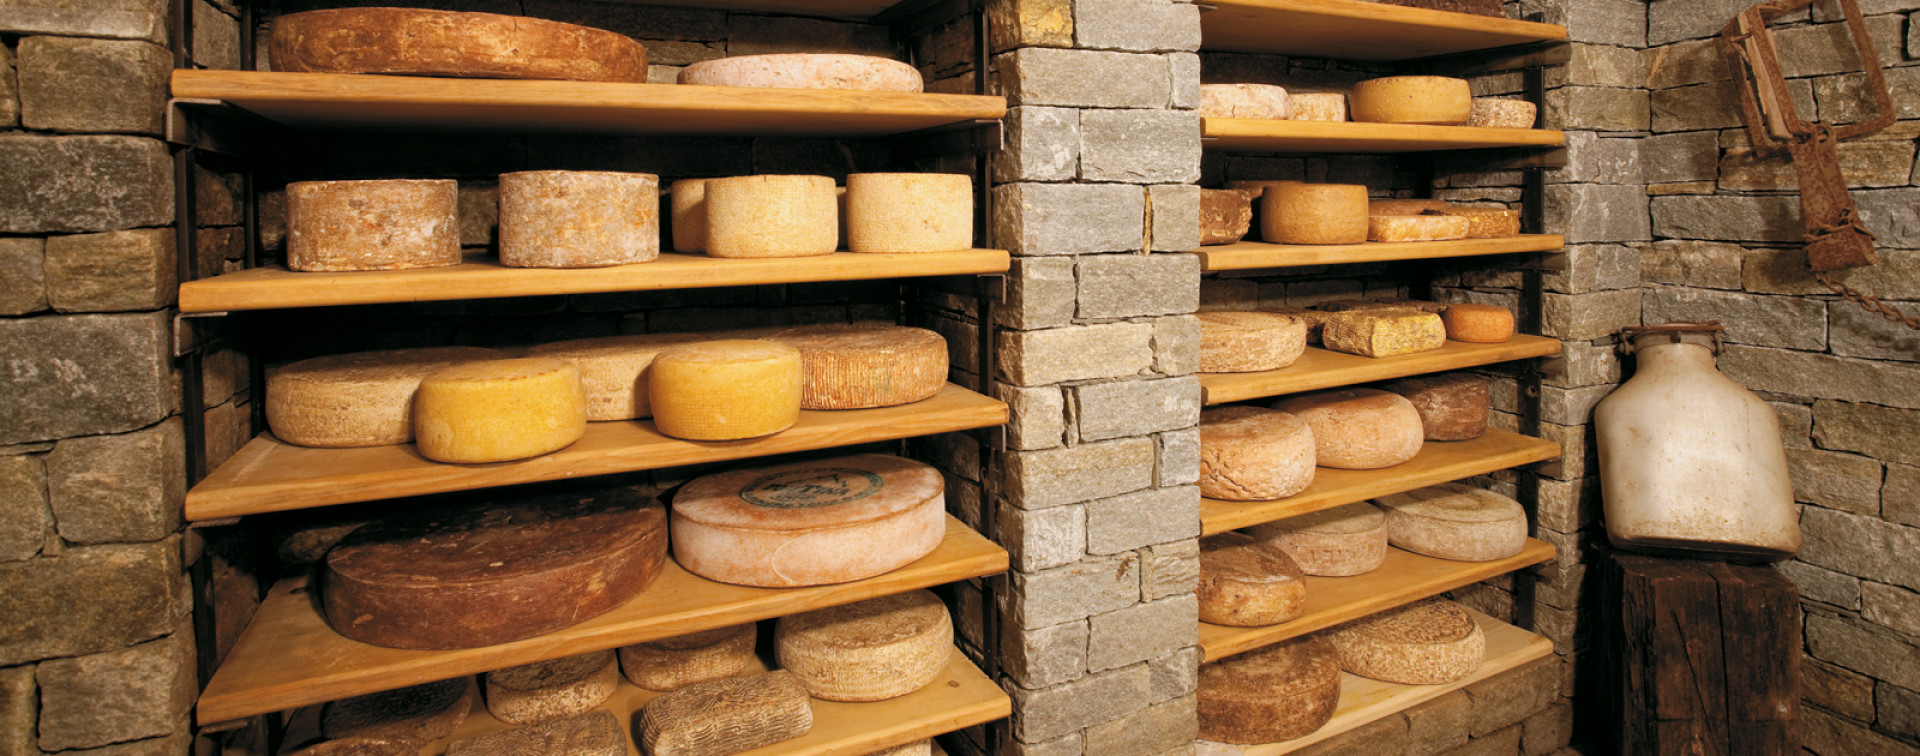 Cheese cellar